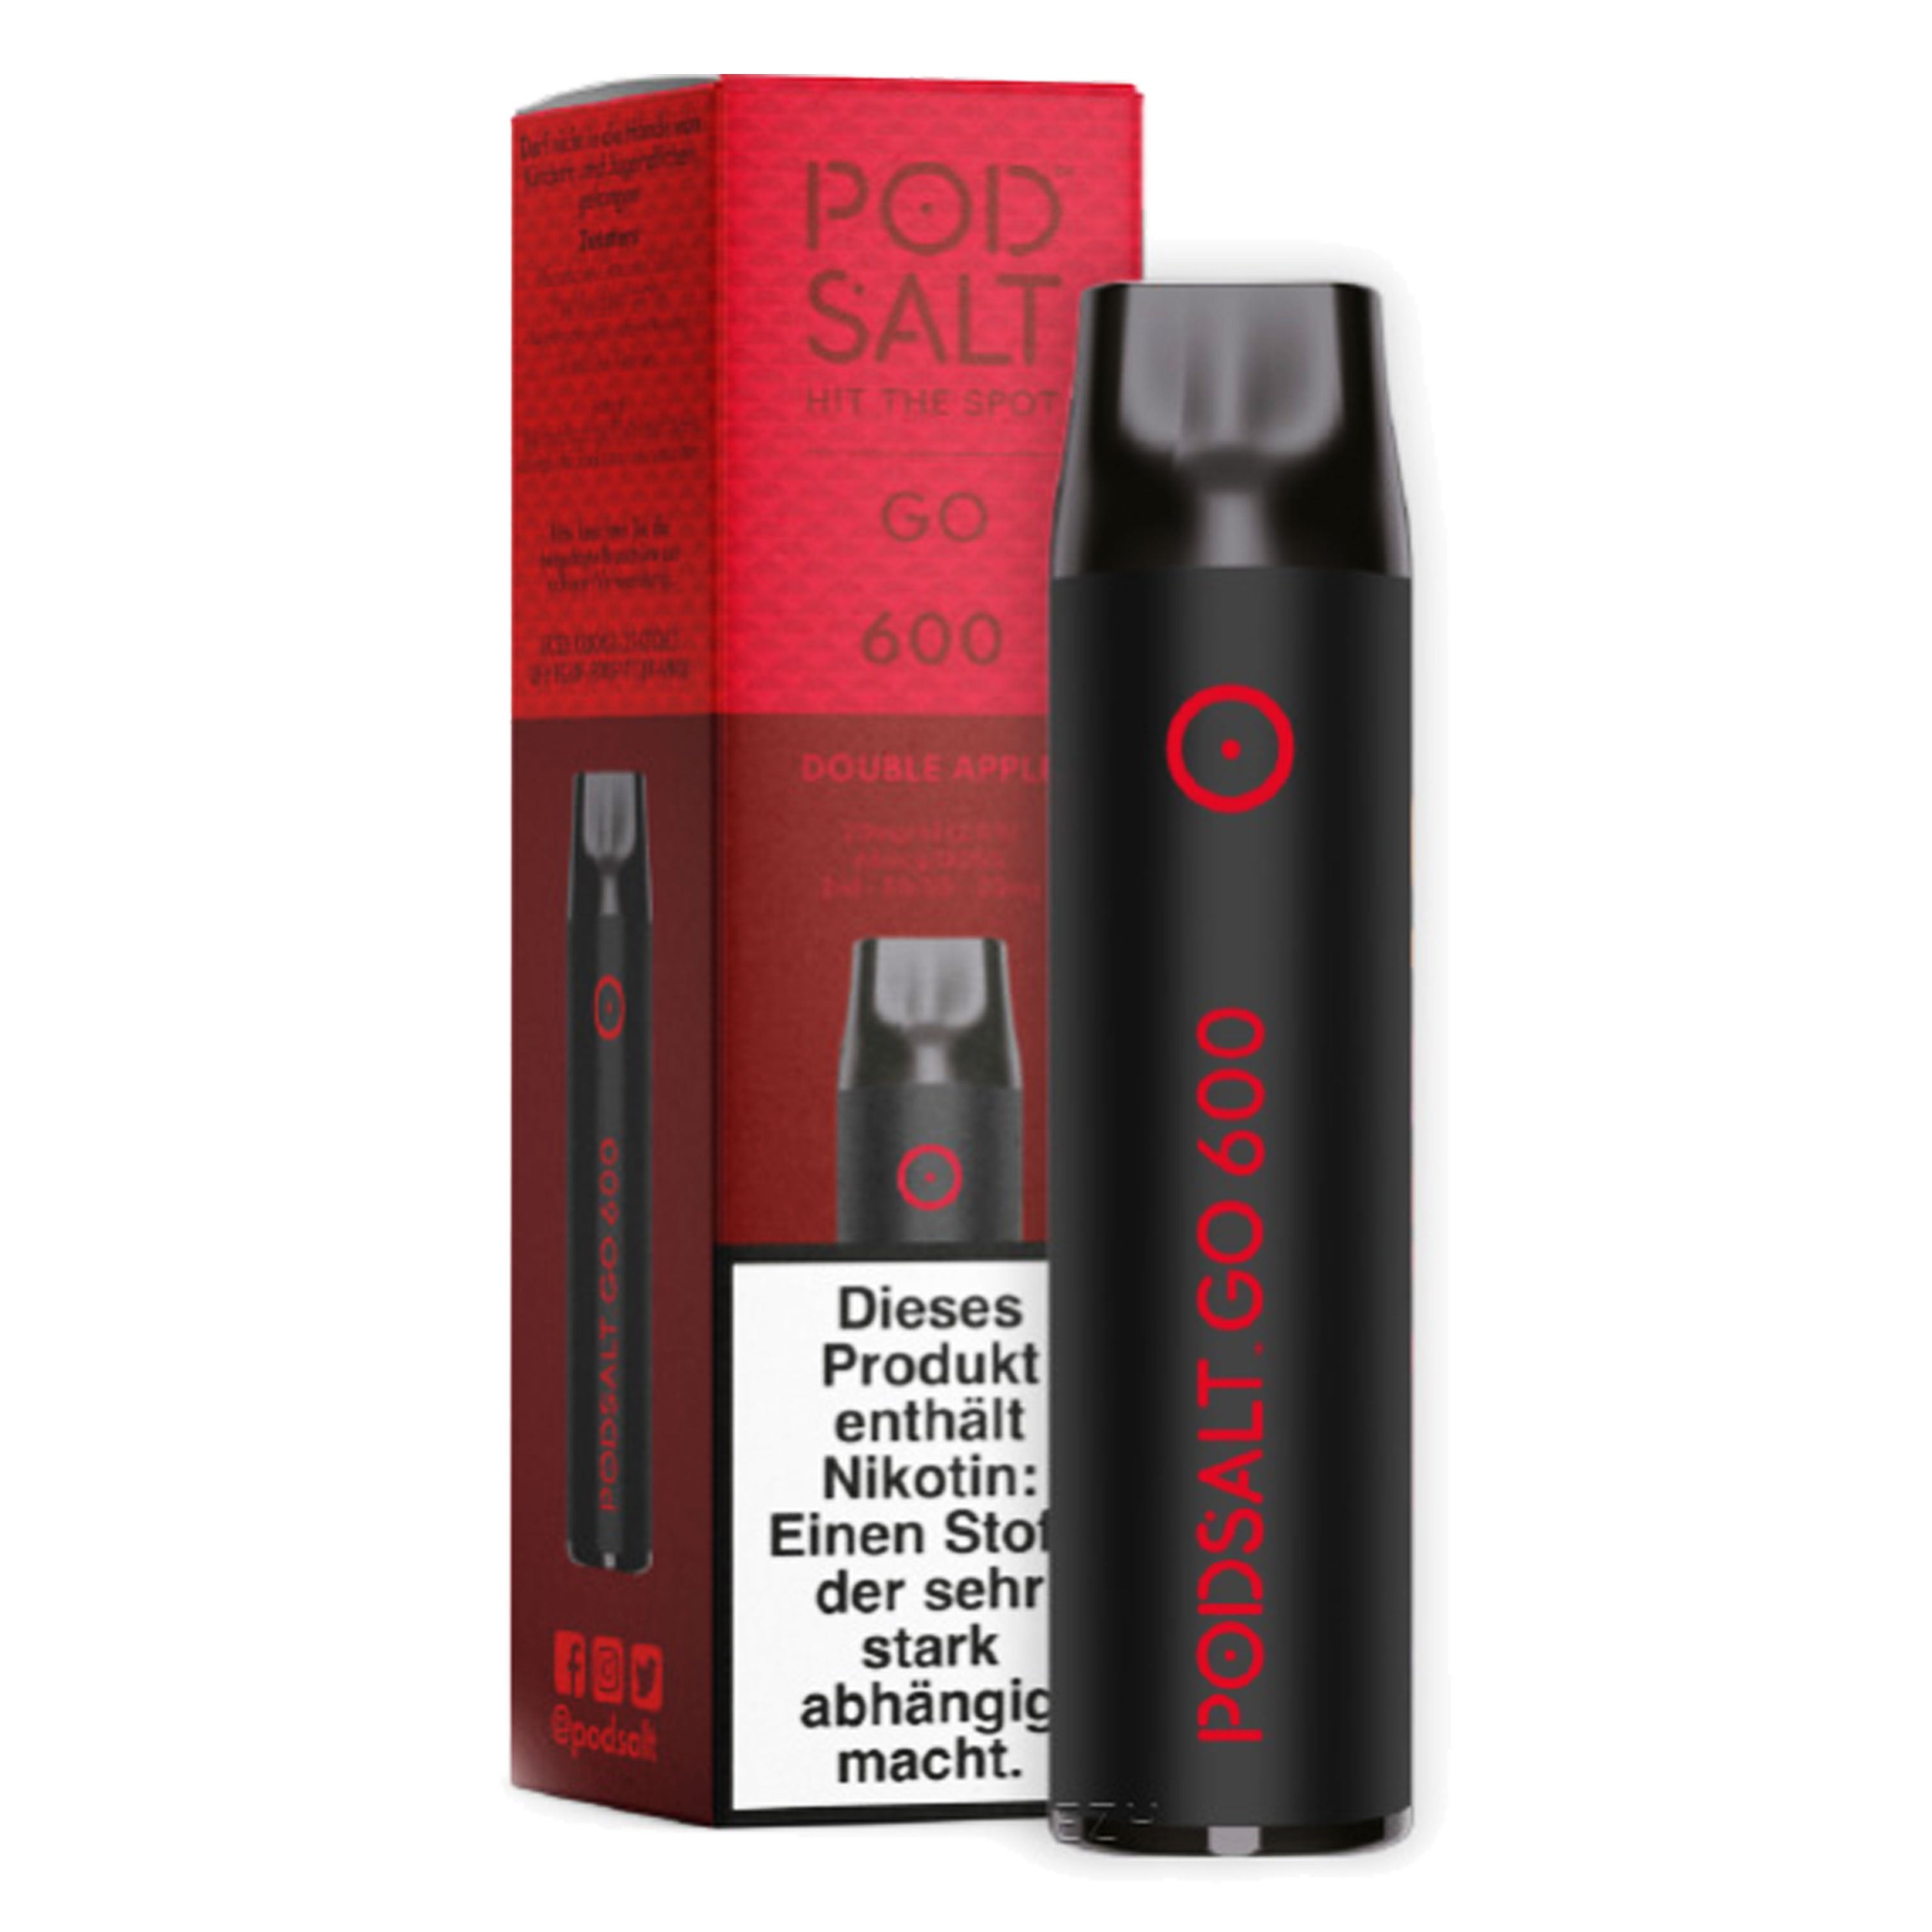 Pod Salt - Go 600 - Double Apple (2 ml) 600 Züge 20mg/ml - Einweg E-Zigarette